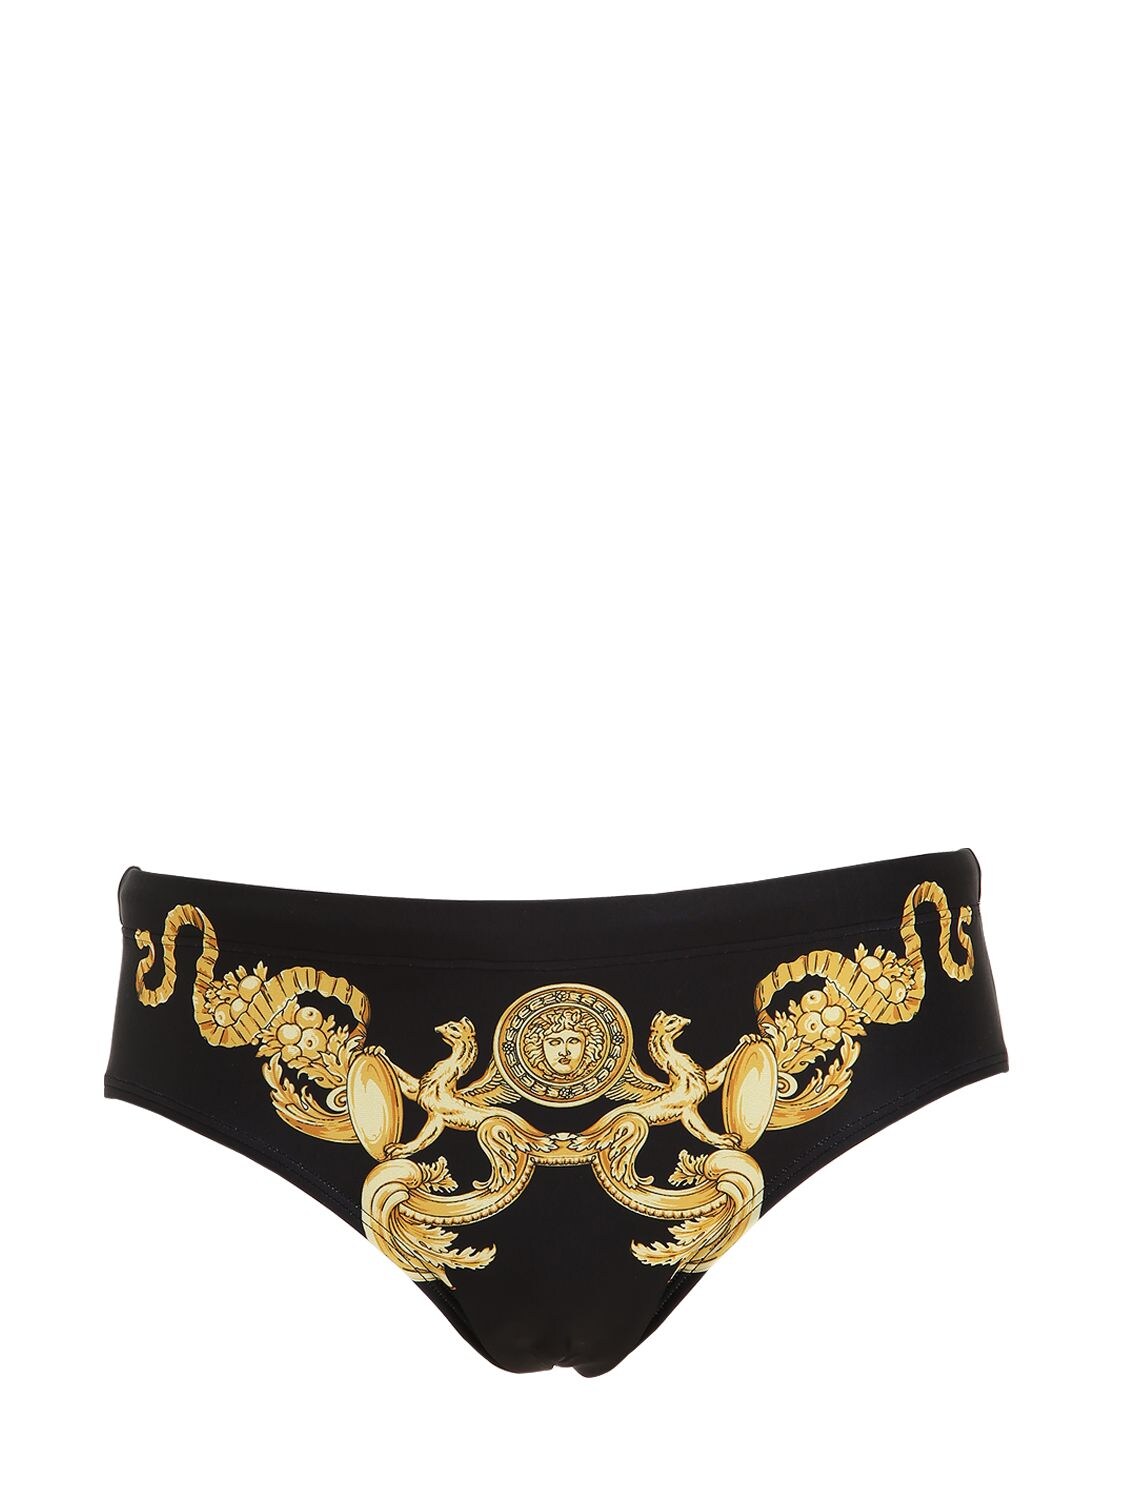 Versace New Baroque Lycra Swim Briefs In Black/gold | ModeSens